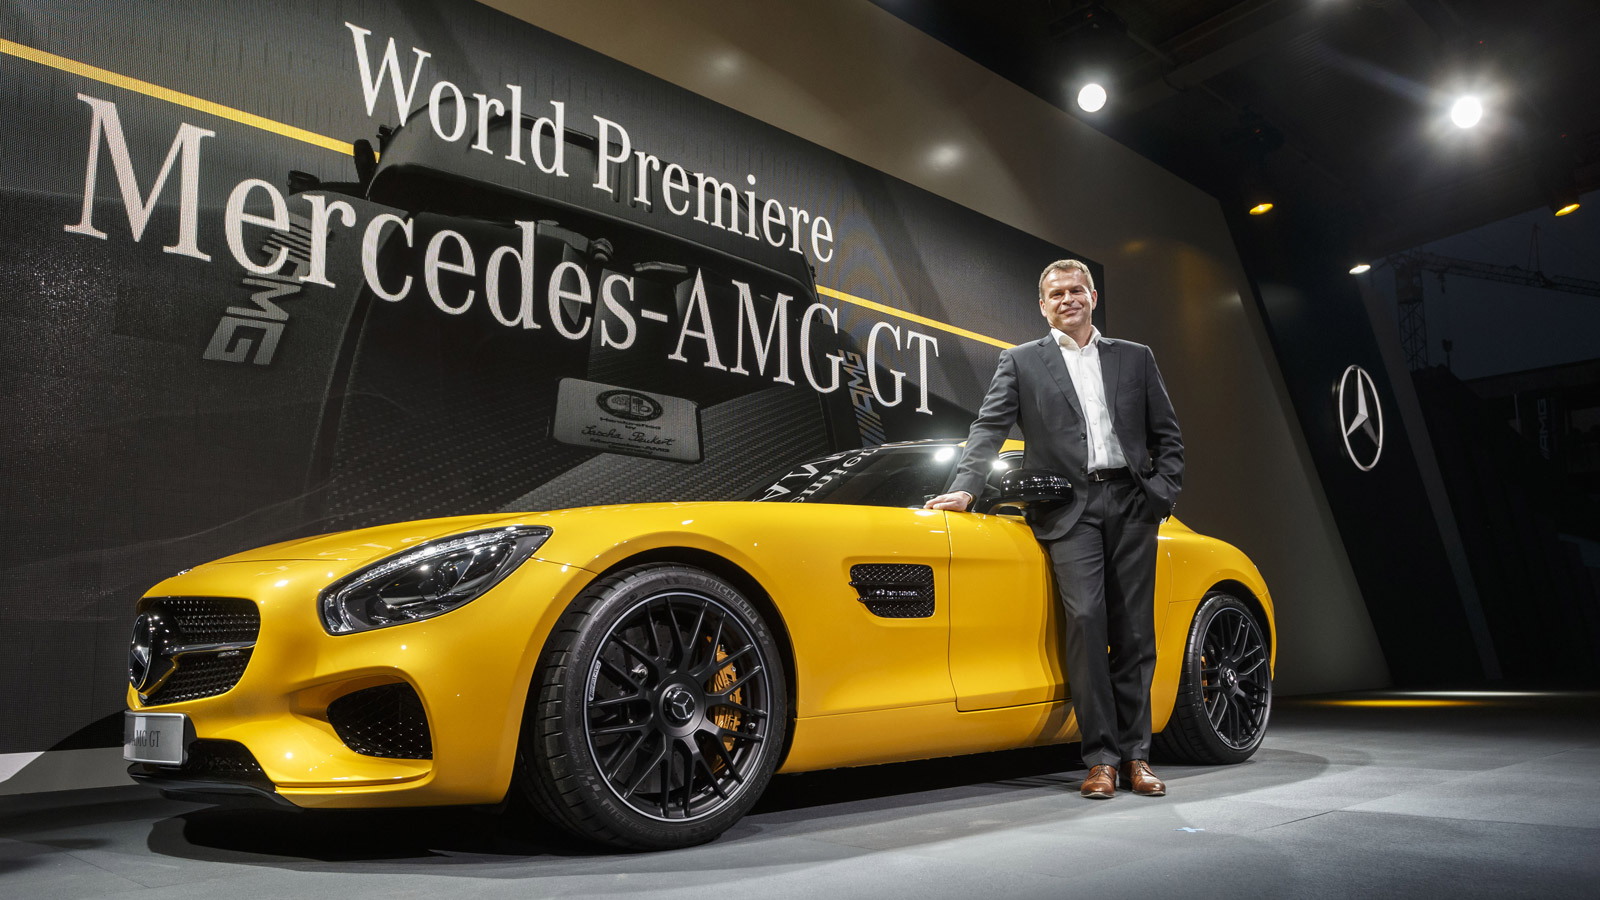 2016 Mercedes-Benz AMG GT world debut, Affalterbach, Germany, Sept 2014